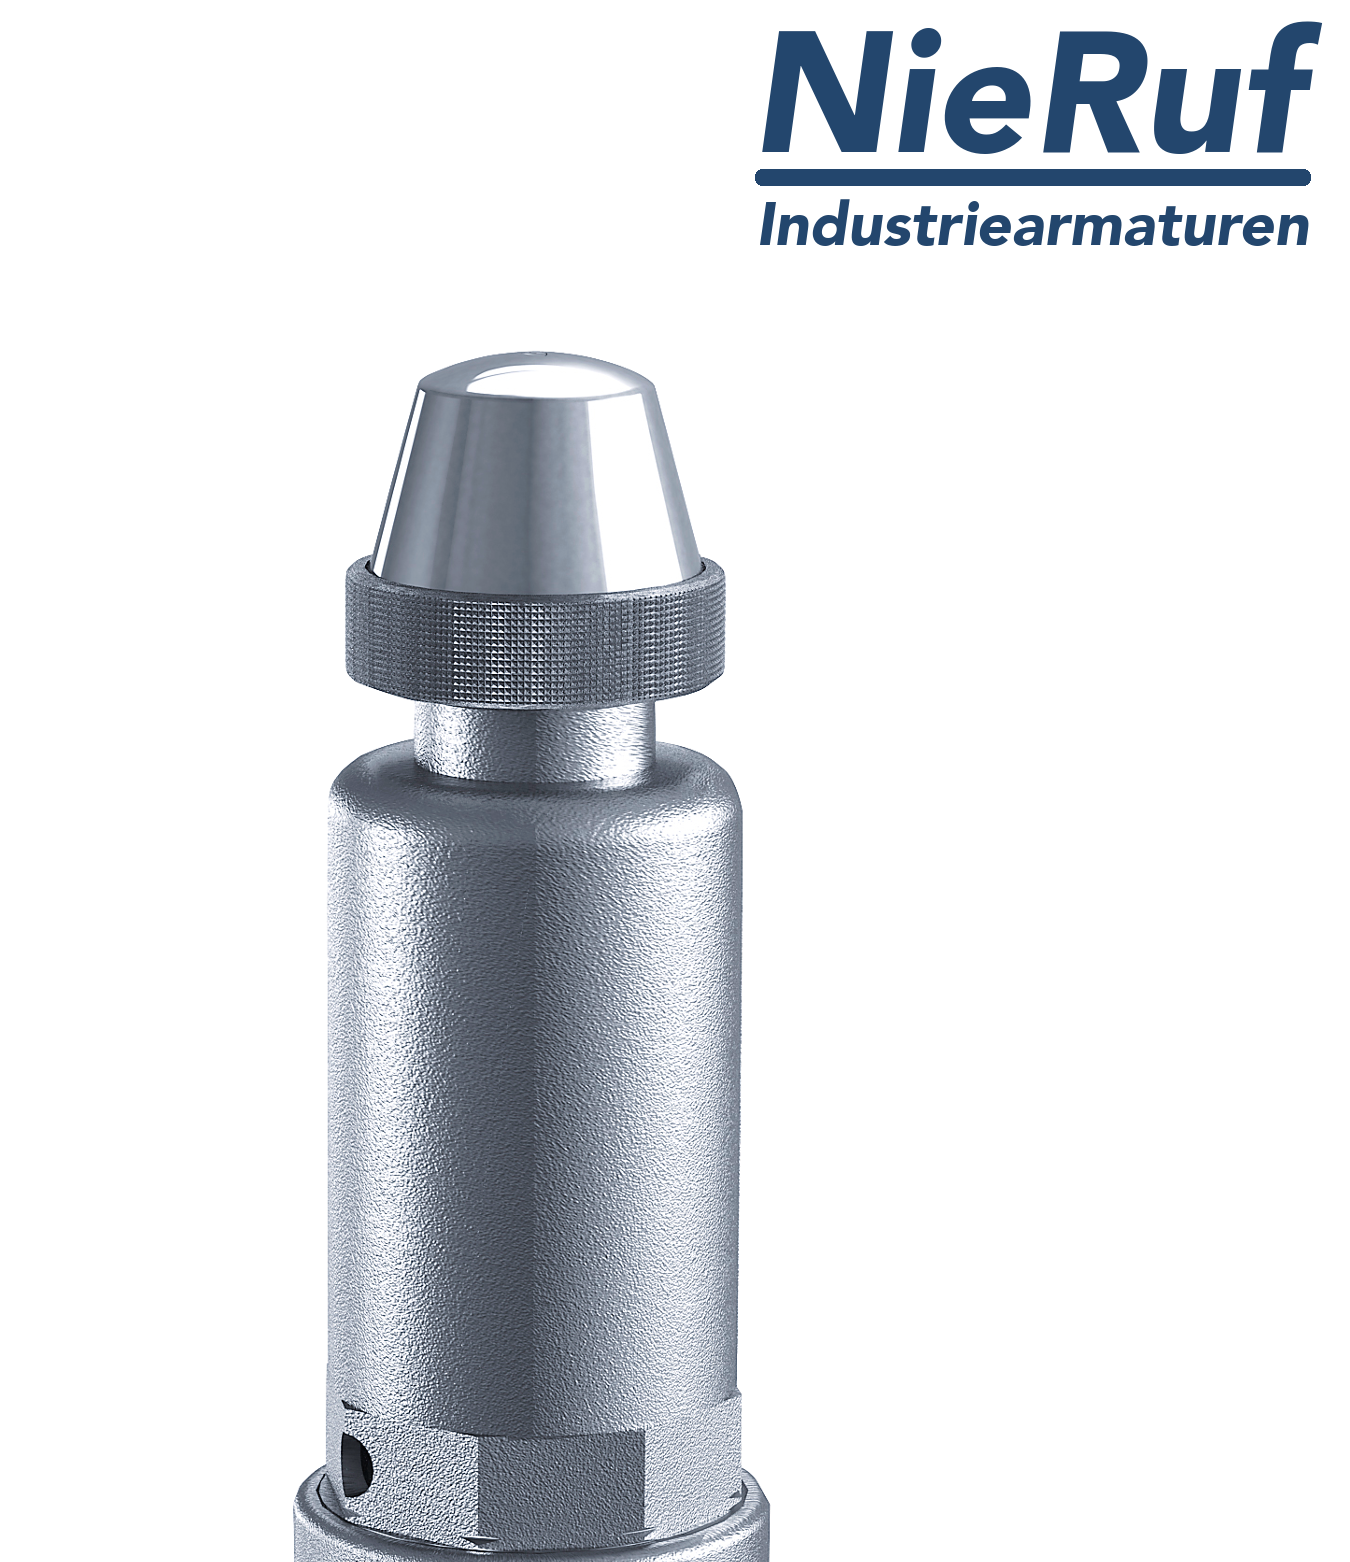 safety valve 2" x 2" fm SV09 neutral gaseous media, stainless steel EPDM